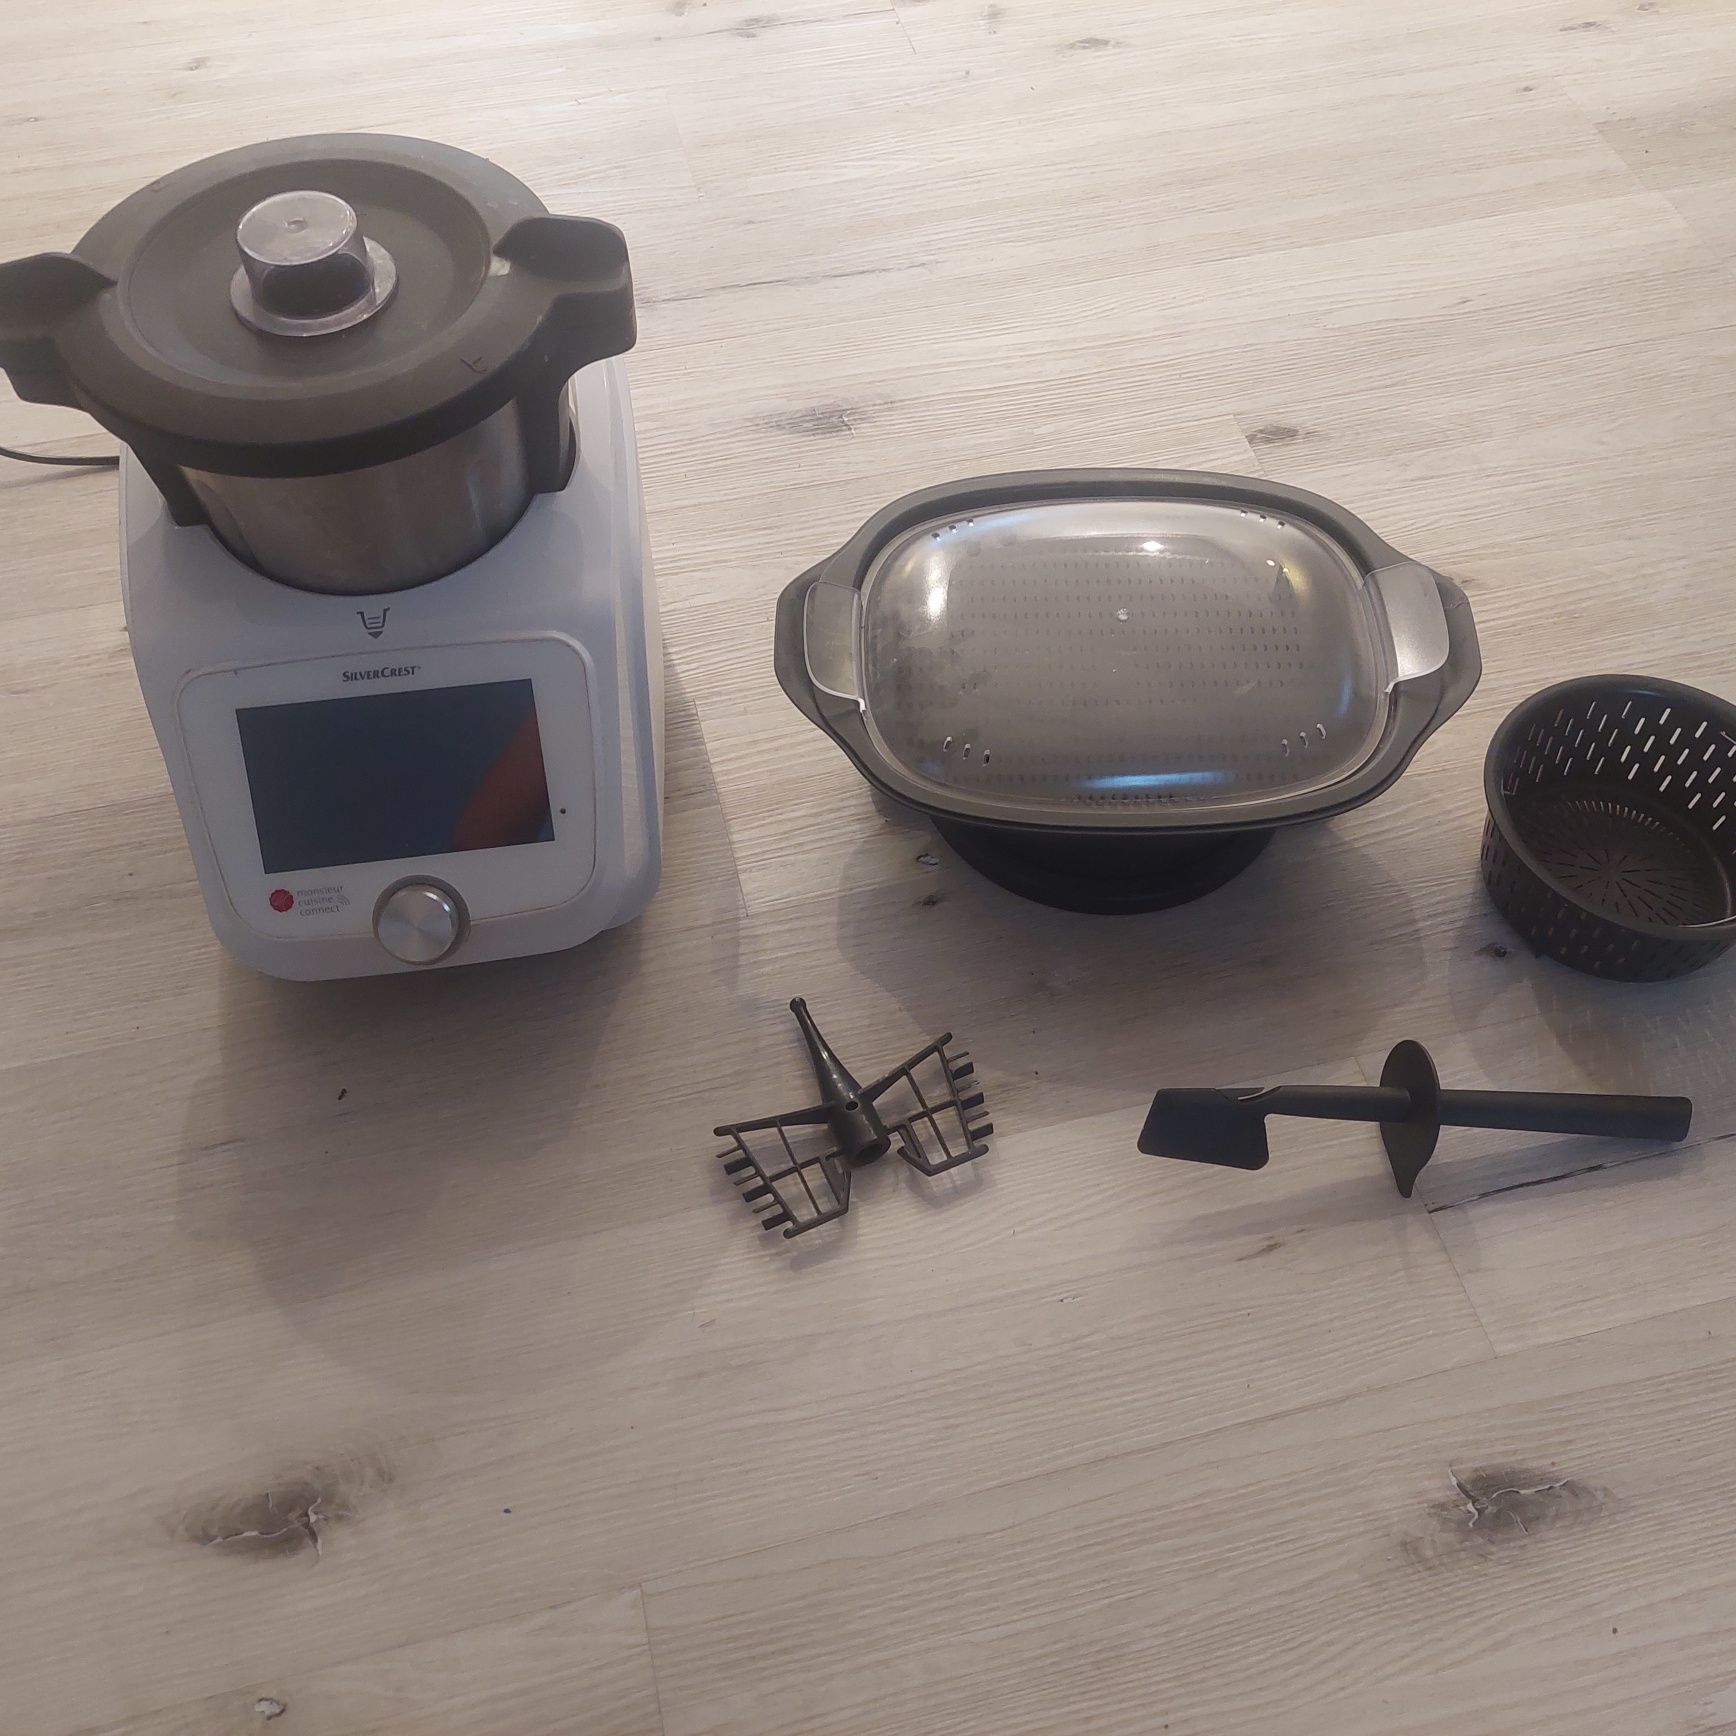 Lidlomix kuchnny robot